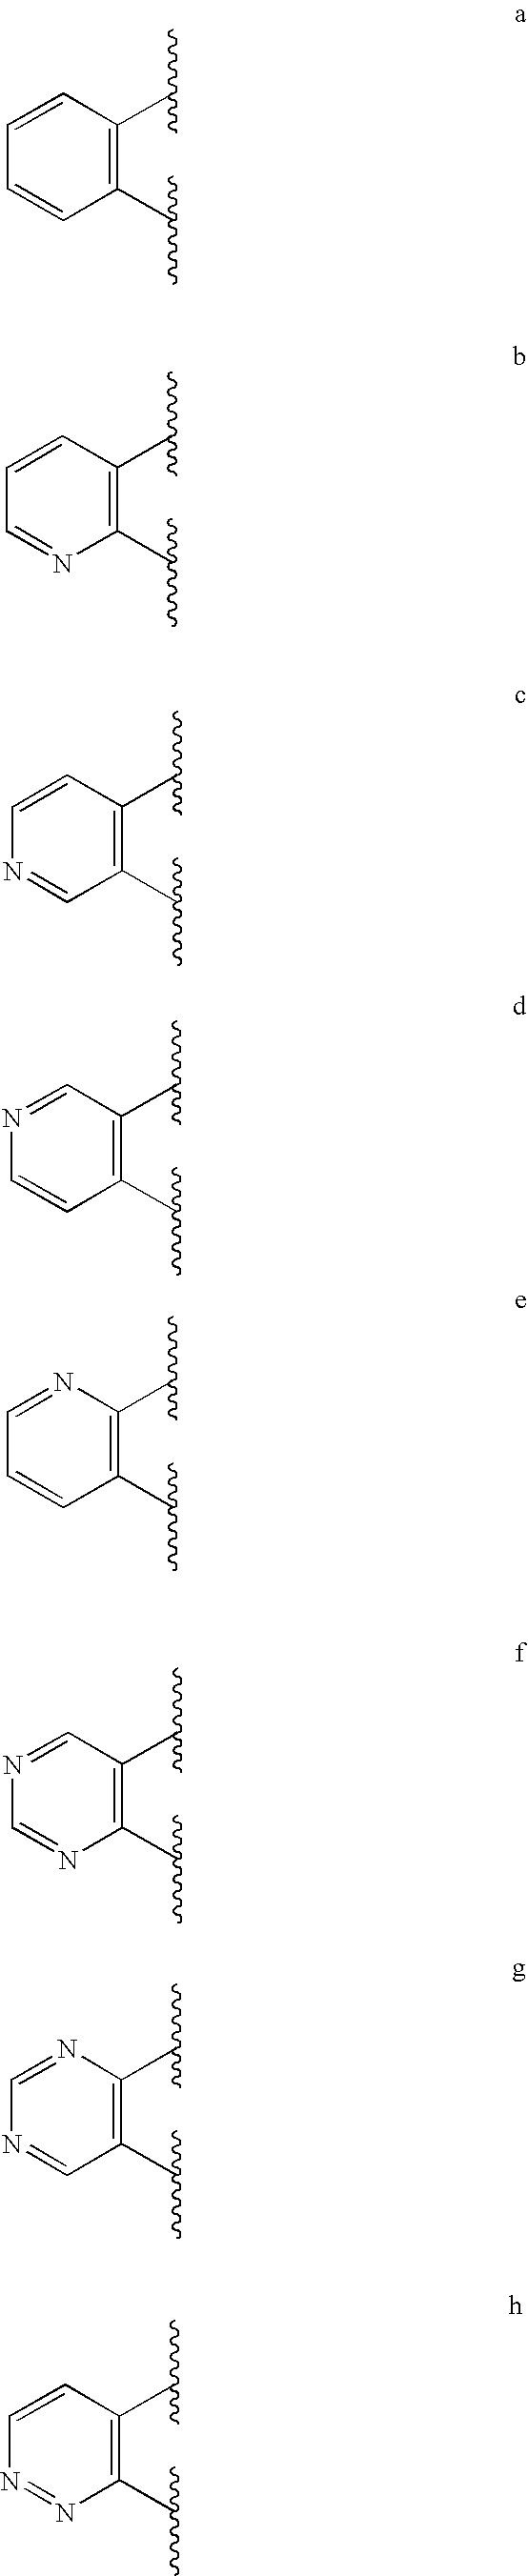 Heteroaryl compounds useful as inhibitors of GSK-3